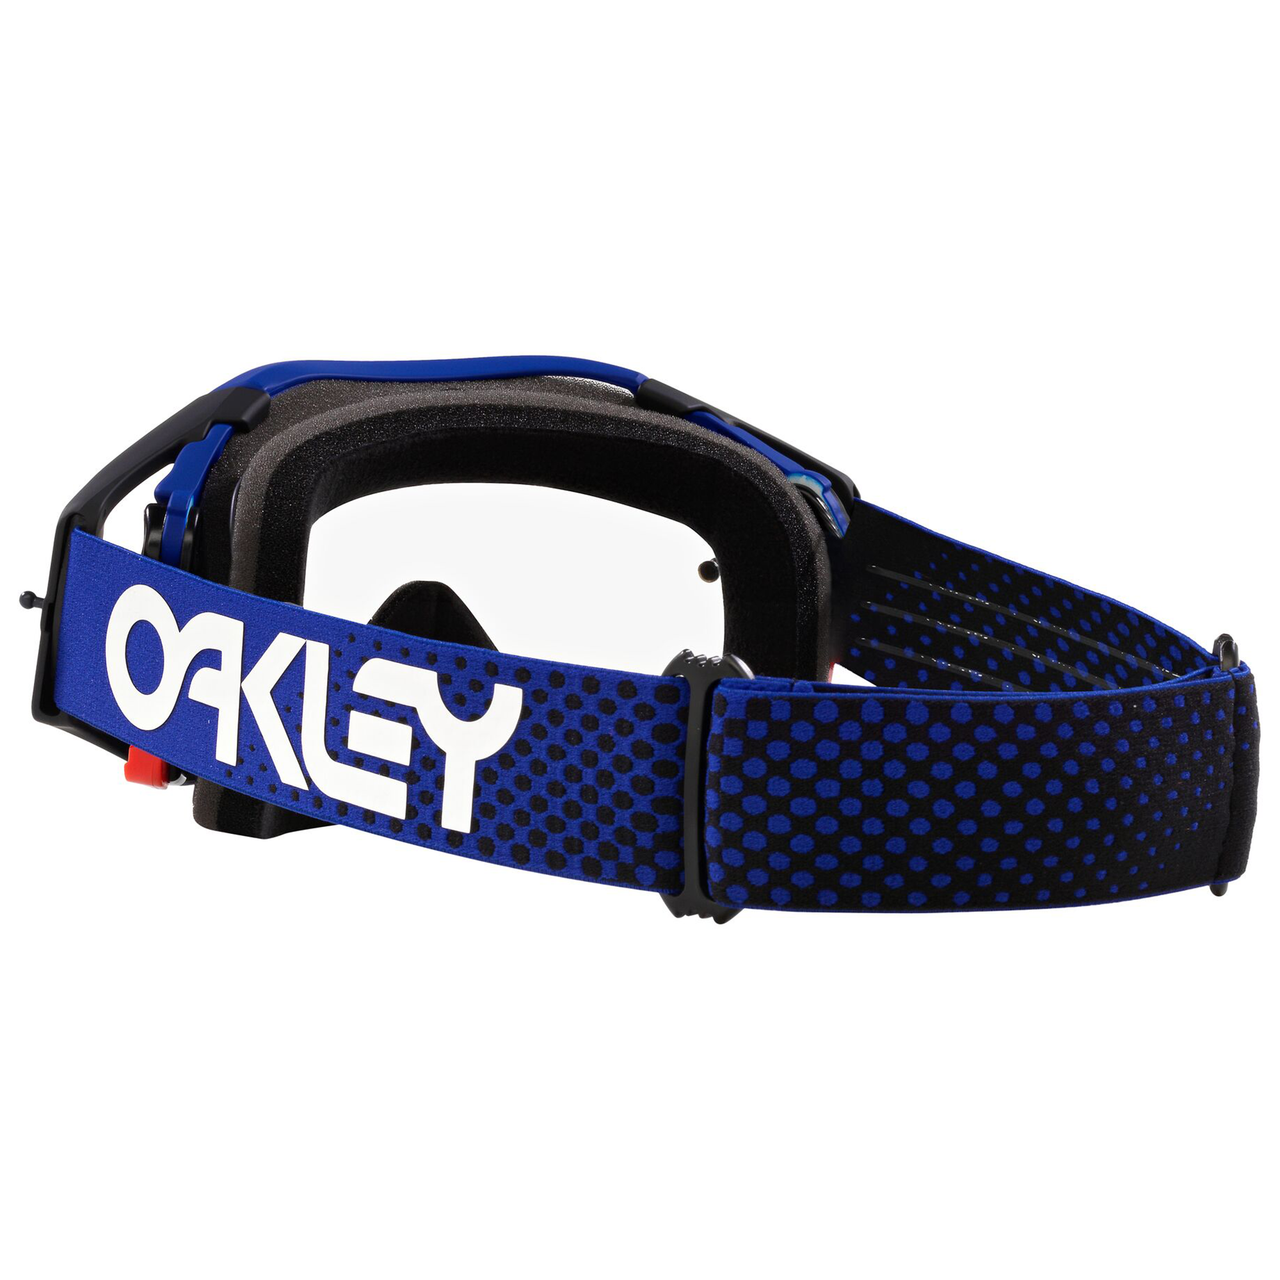 Oakley Airbrake MX Goggle Moto Blue 2 - Clear Lens